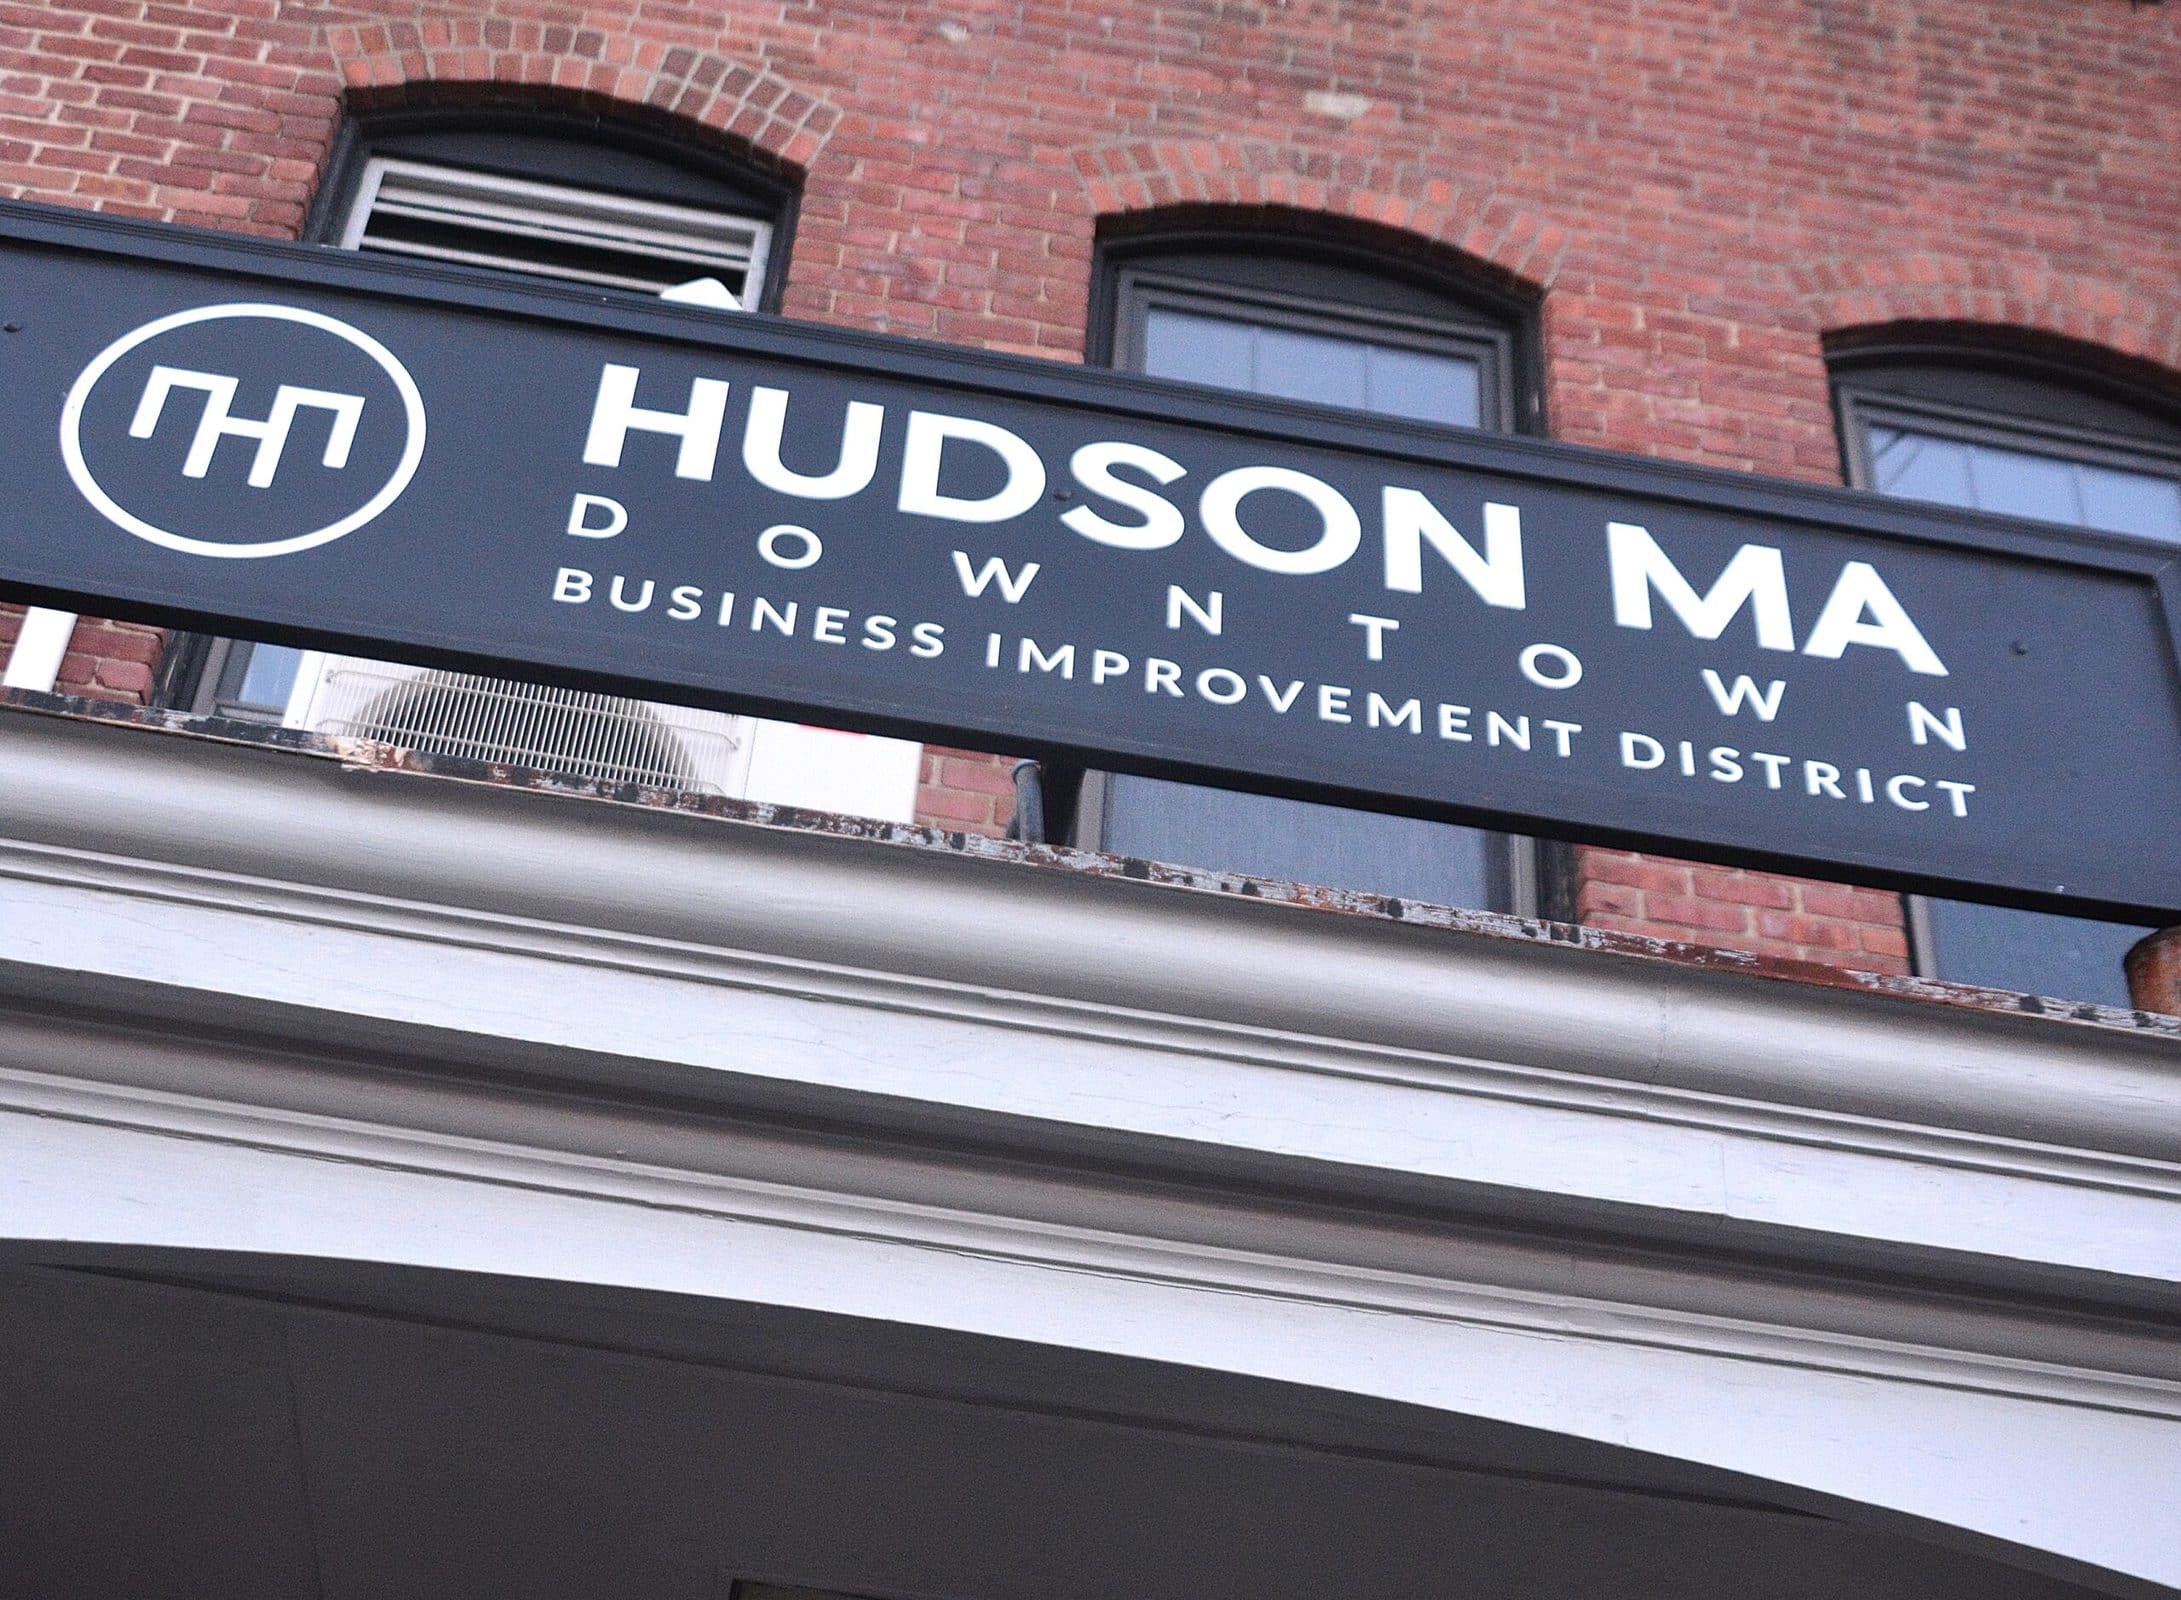 Hudson business district celebrates national recognition